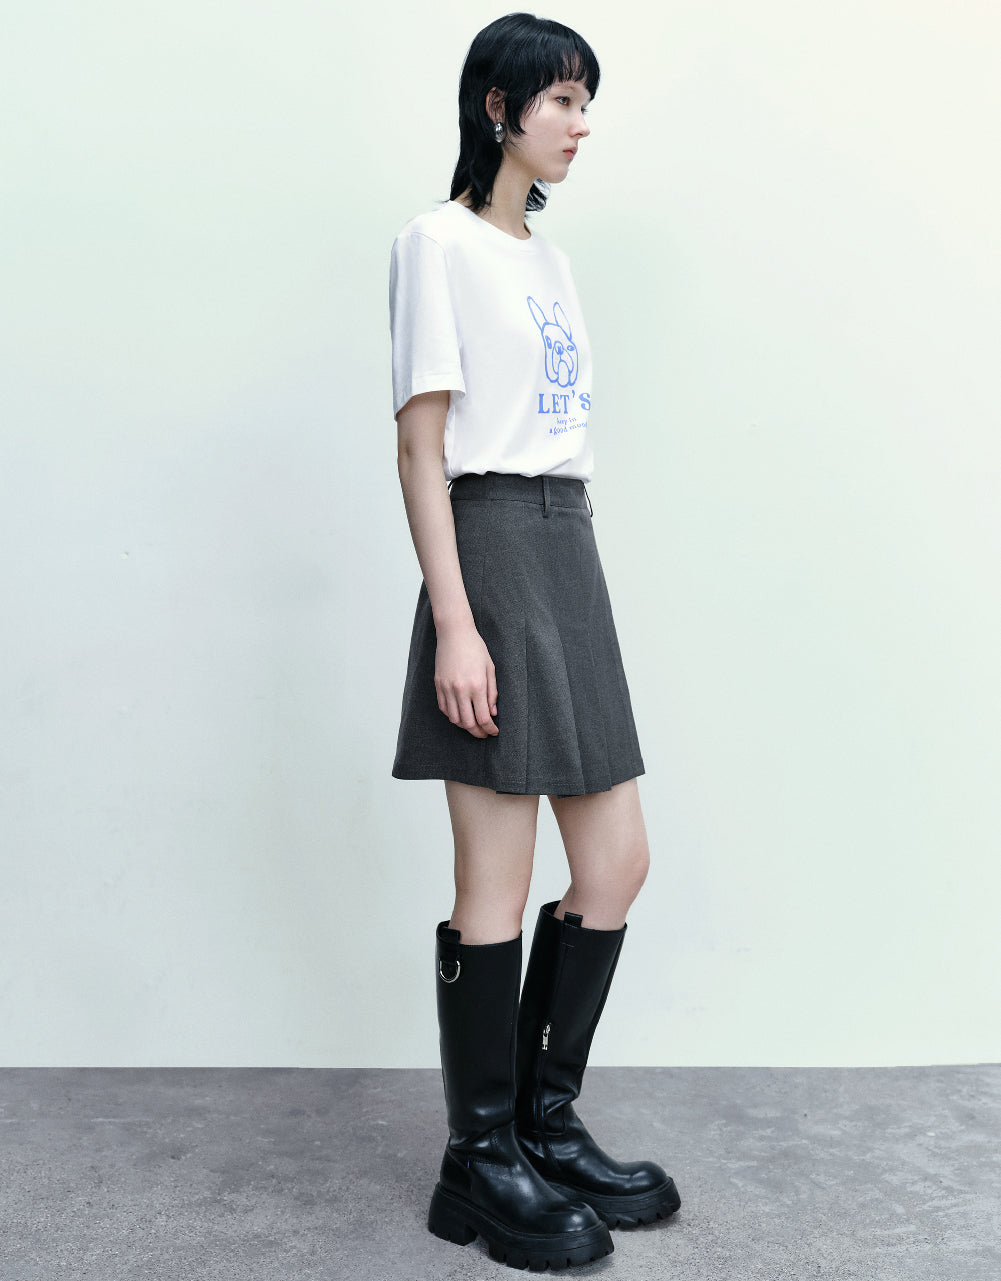 Pleated Mini A-Line Skirt